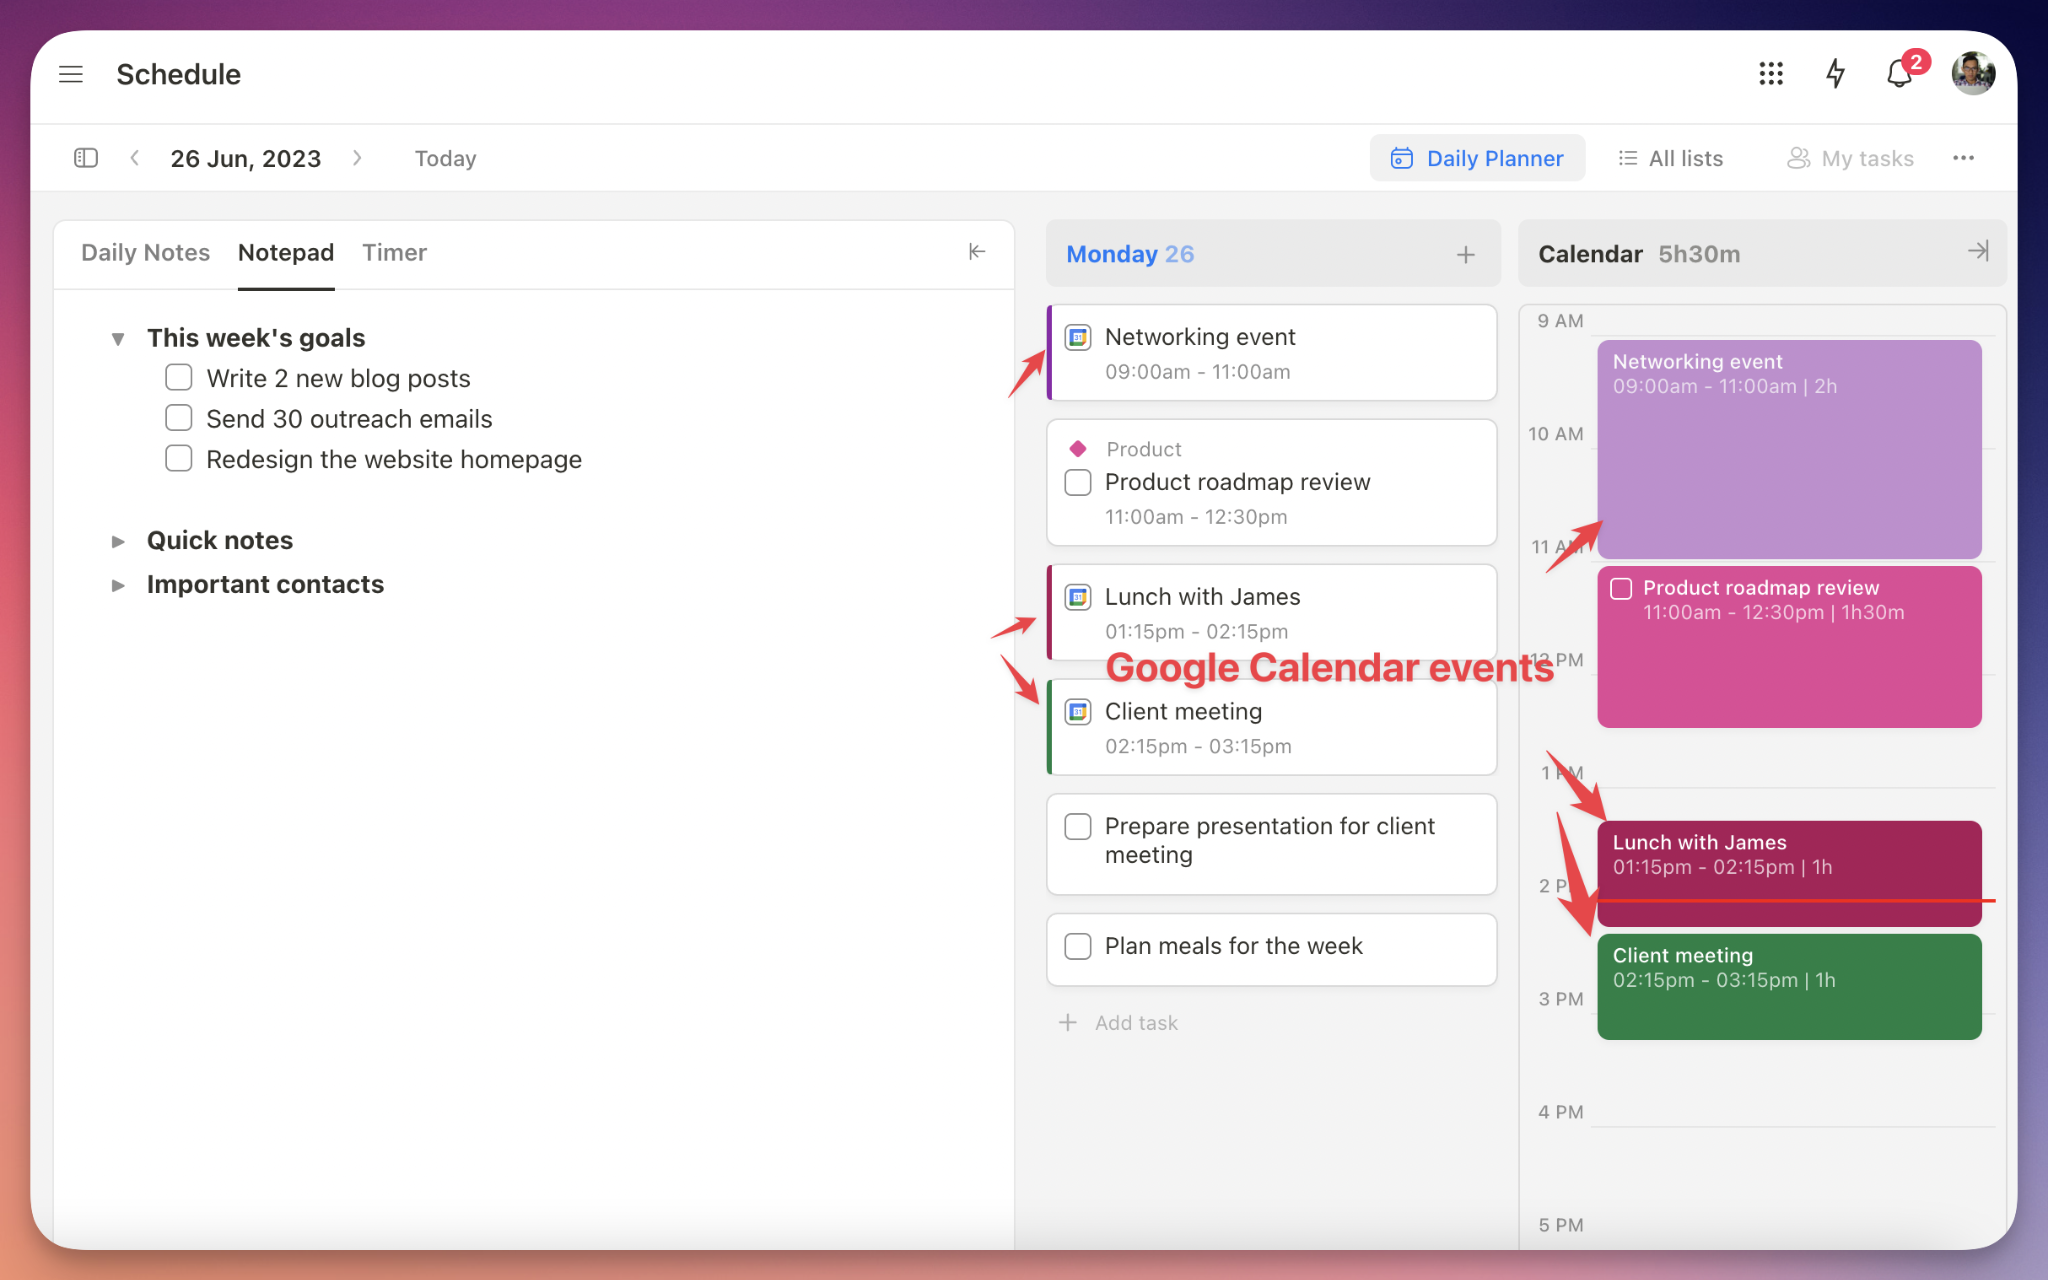 Upbase's integration with Google Calendar